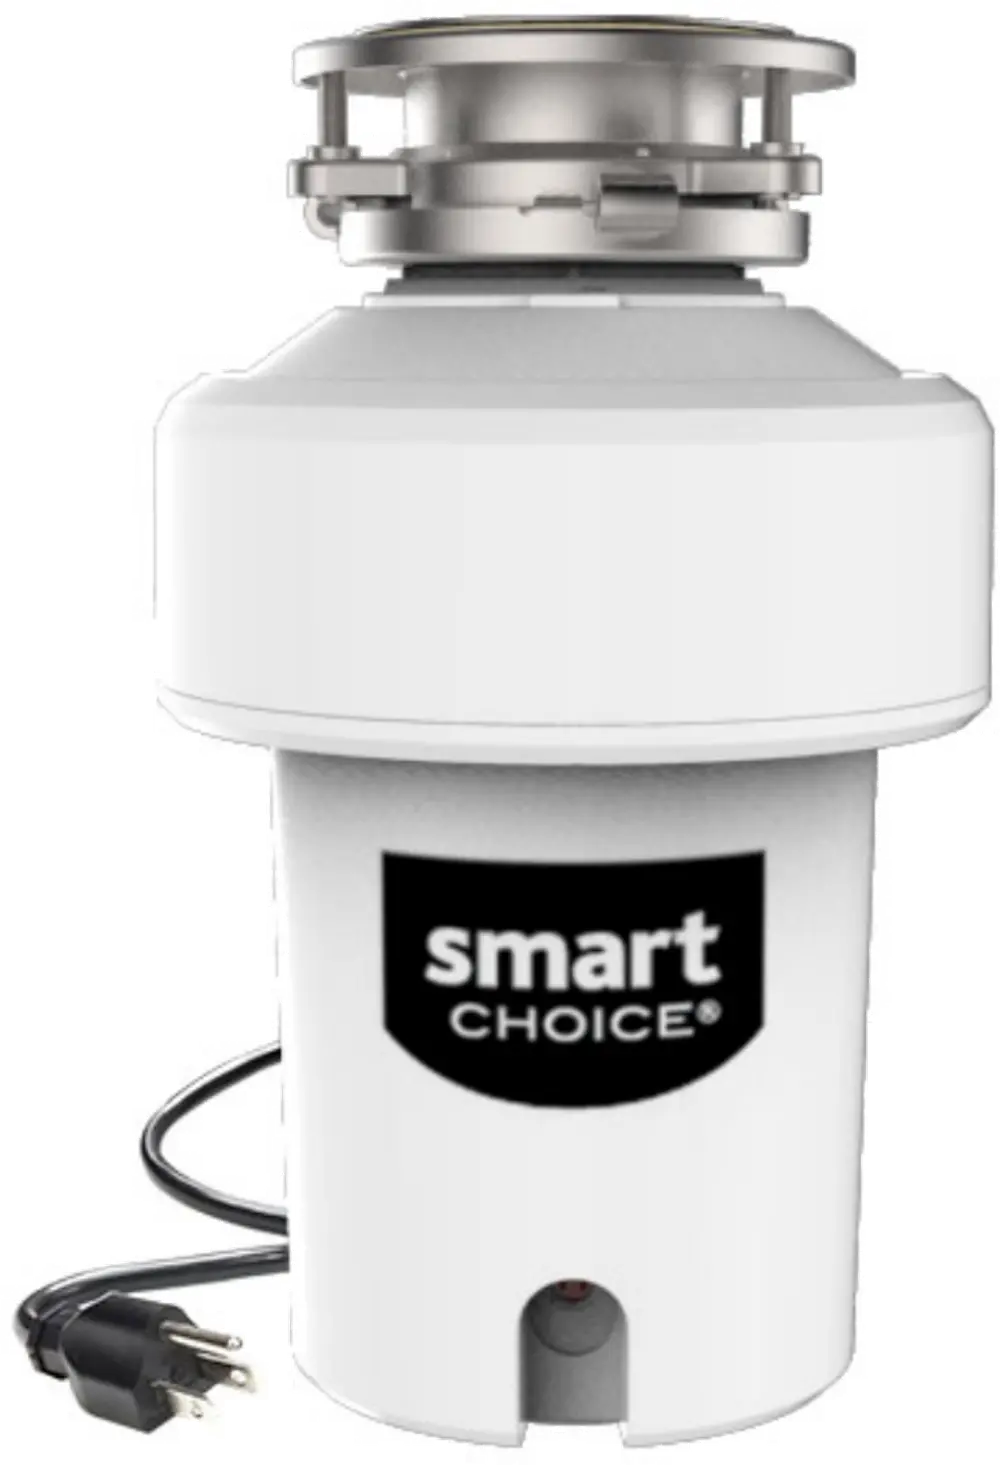 SC75DISPC1 Frigidaire Smart Choice Food Disposal - 3/4 HP, White-1